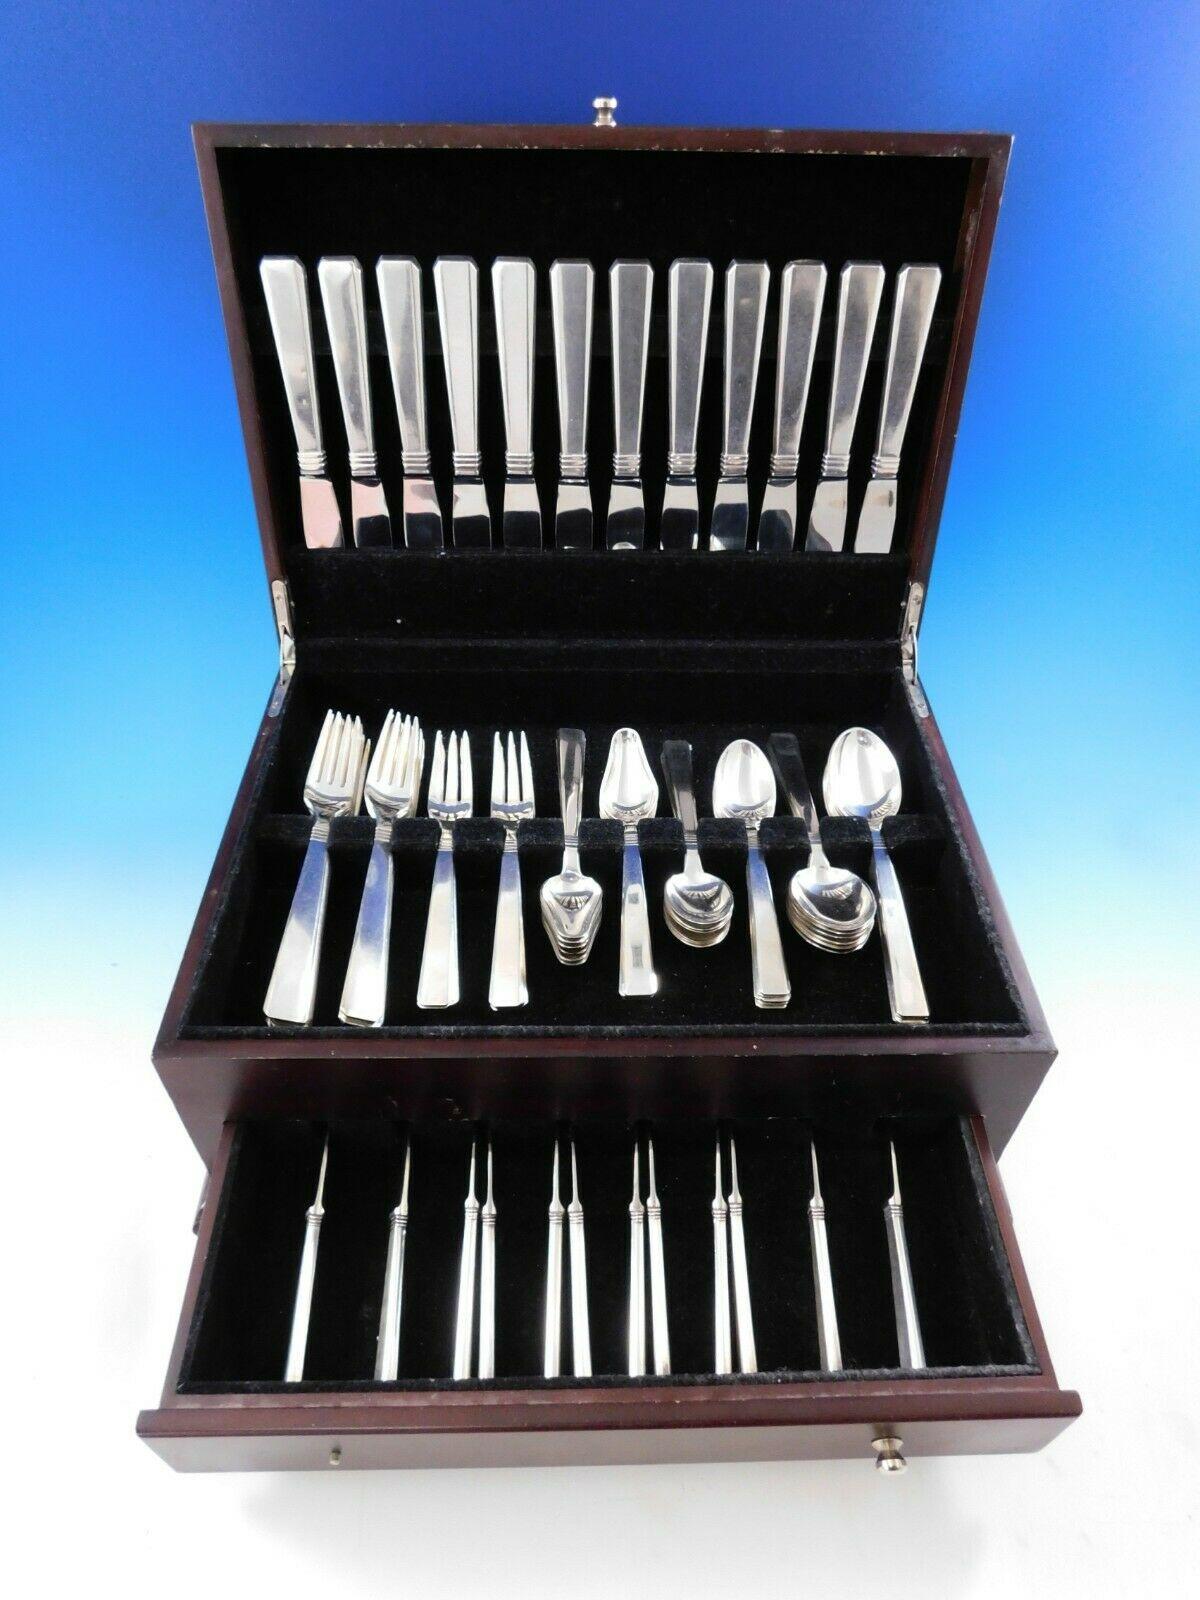 Blok by Peter Hertz Danish Scandinavian Moderne sterling silver flatware set - 84 pieces. This set includes:

12 knives, 8 1/4